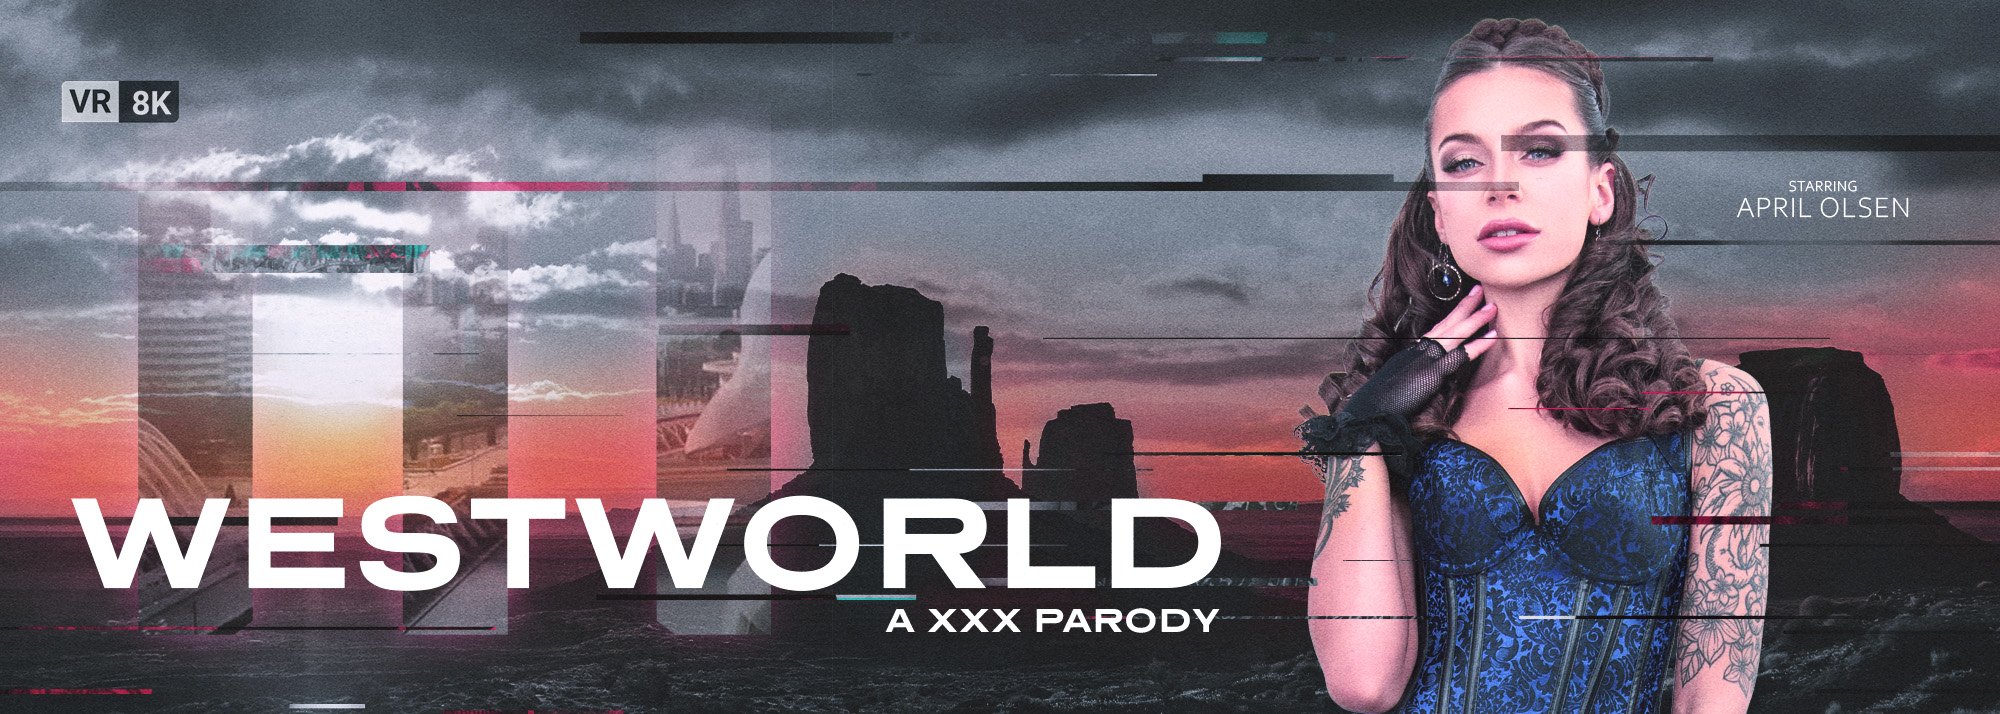 Westworld (A Porn  Parody) - VR Video, Starring: April Olsen